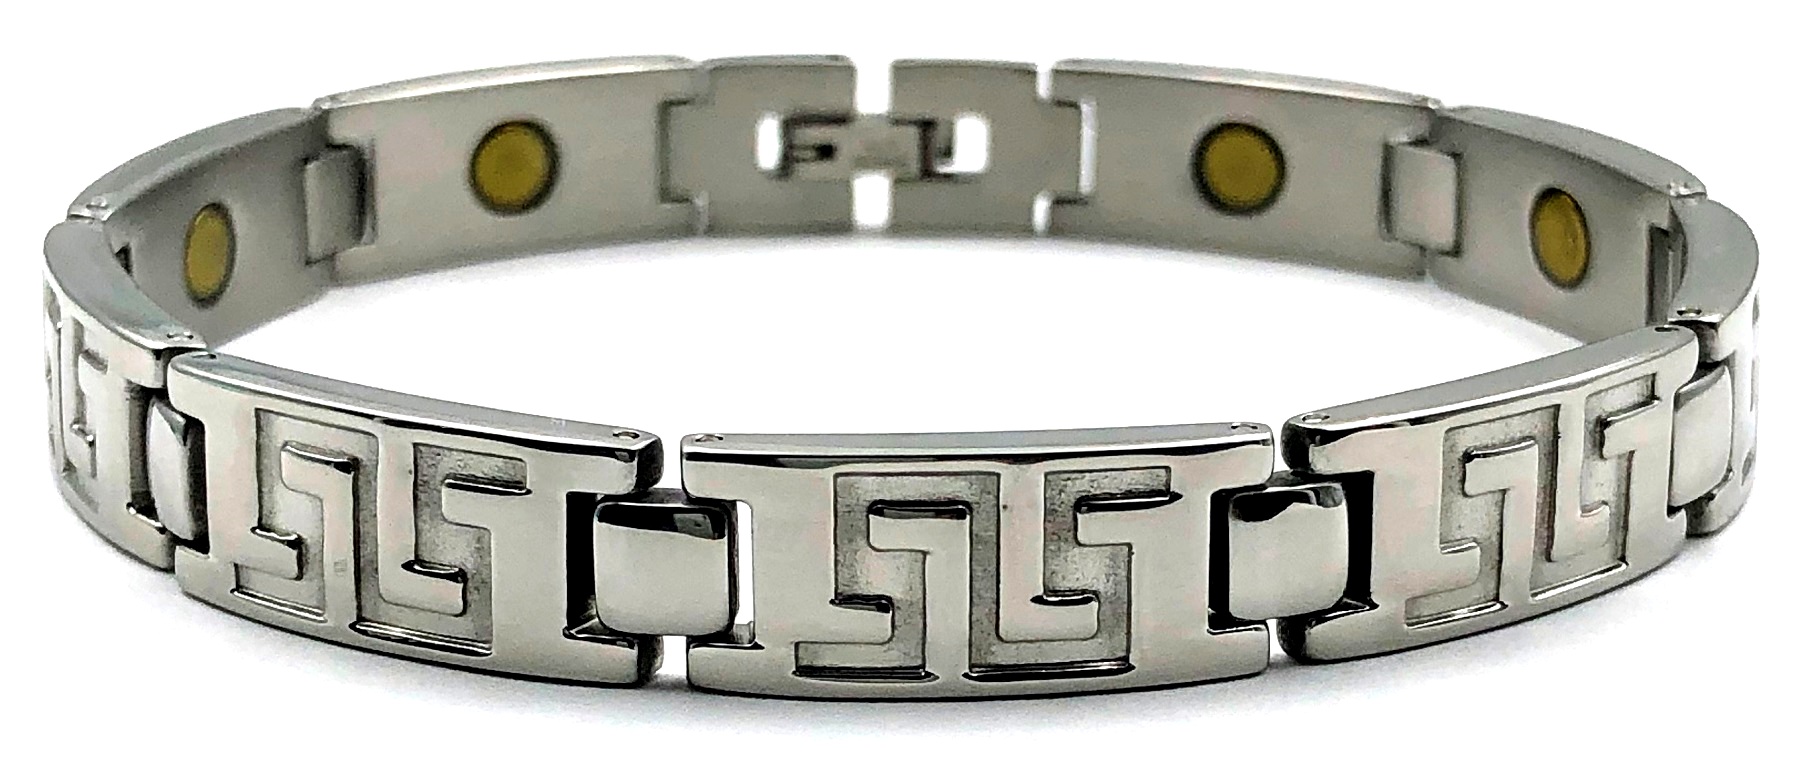 Stainless Steel Steel Magnetic Bracelet #SSB129